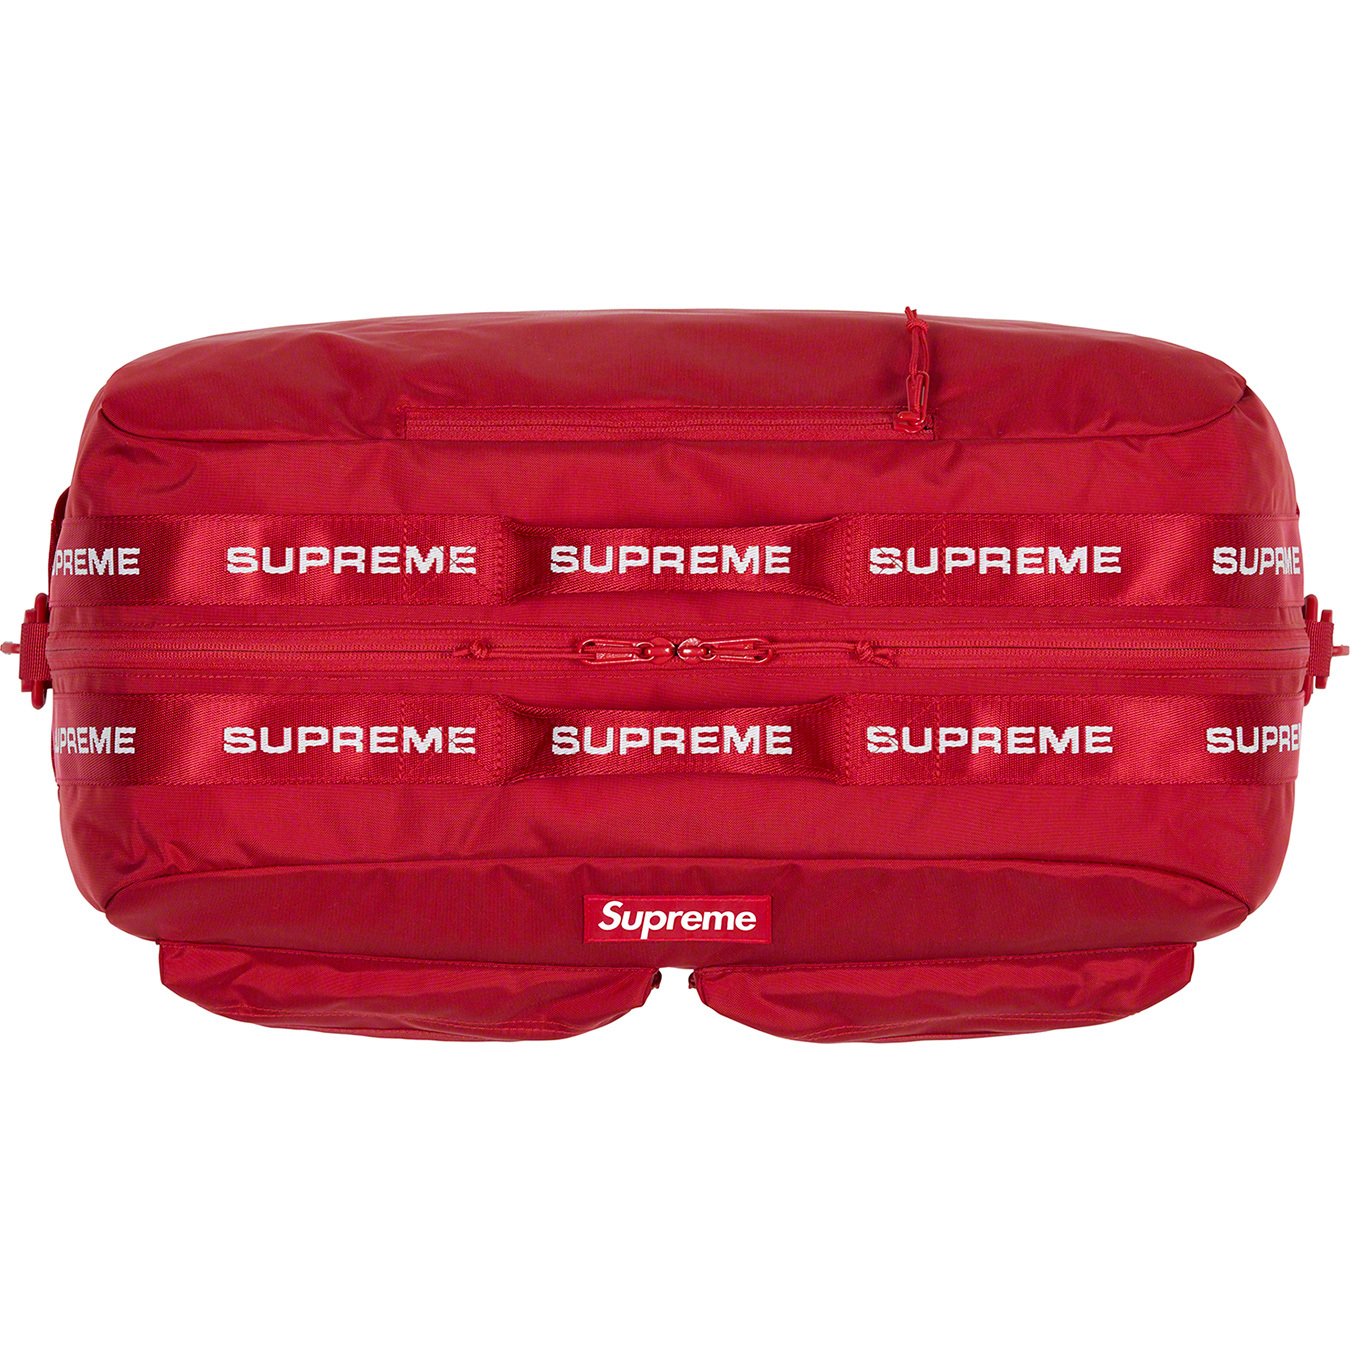 Supreme Red Duffle Bag FW17 